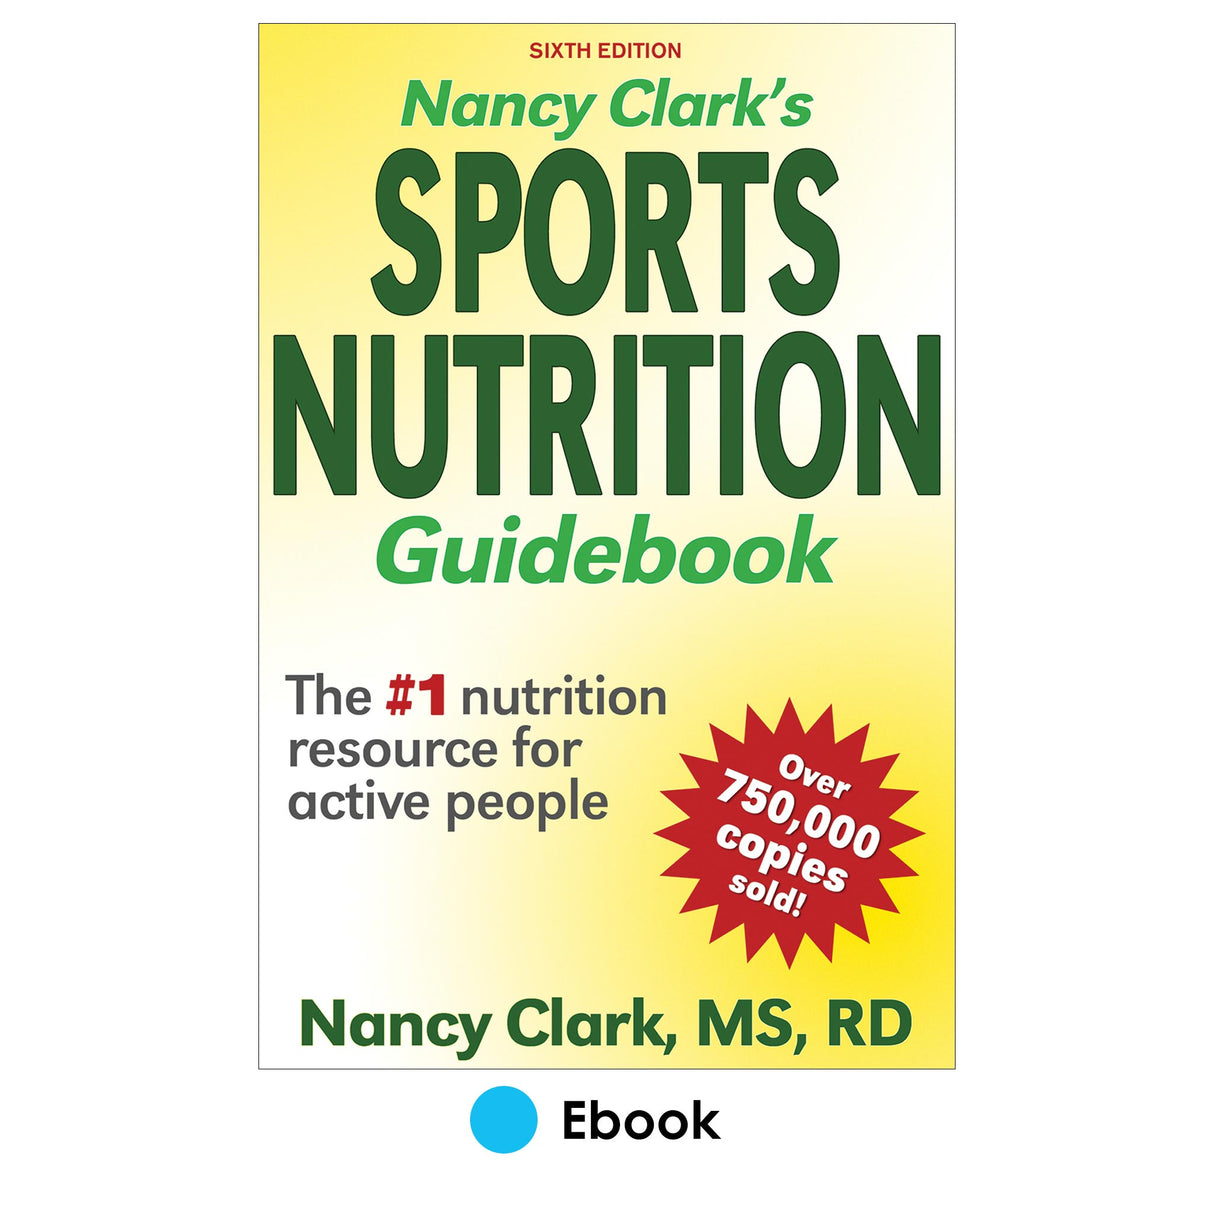 Nancy Clark's Sports Nutrition Guidebook 6th Edition epub